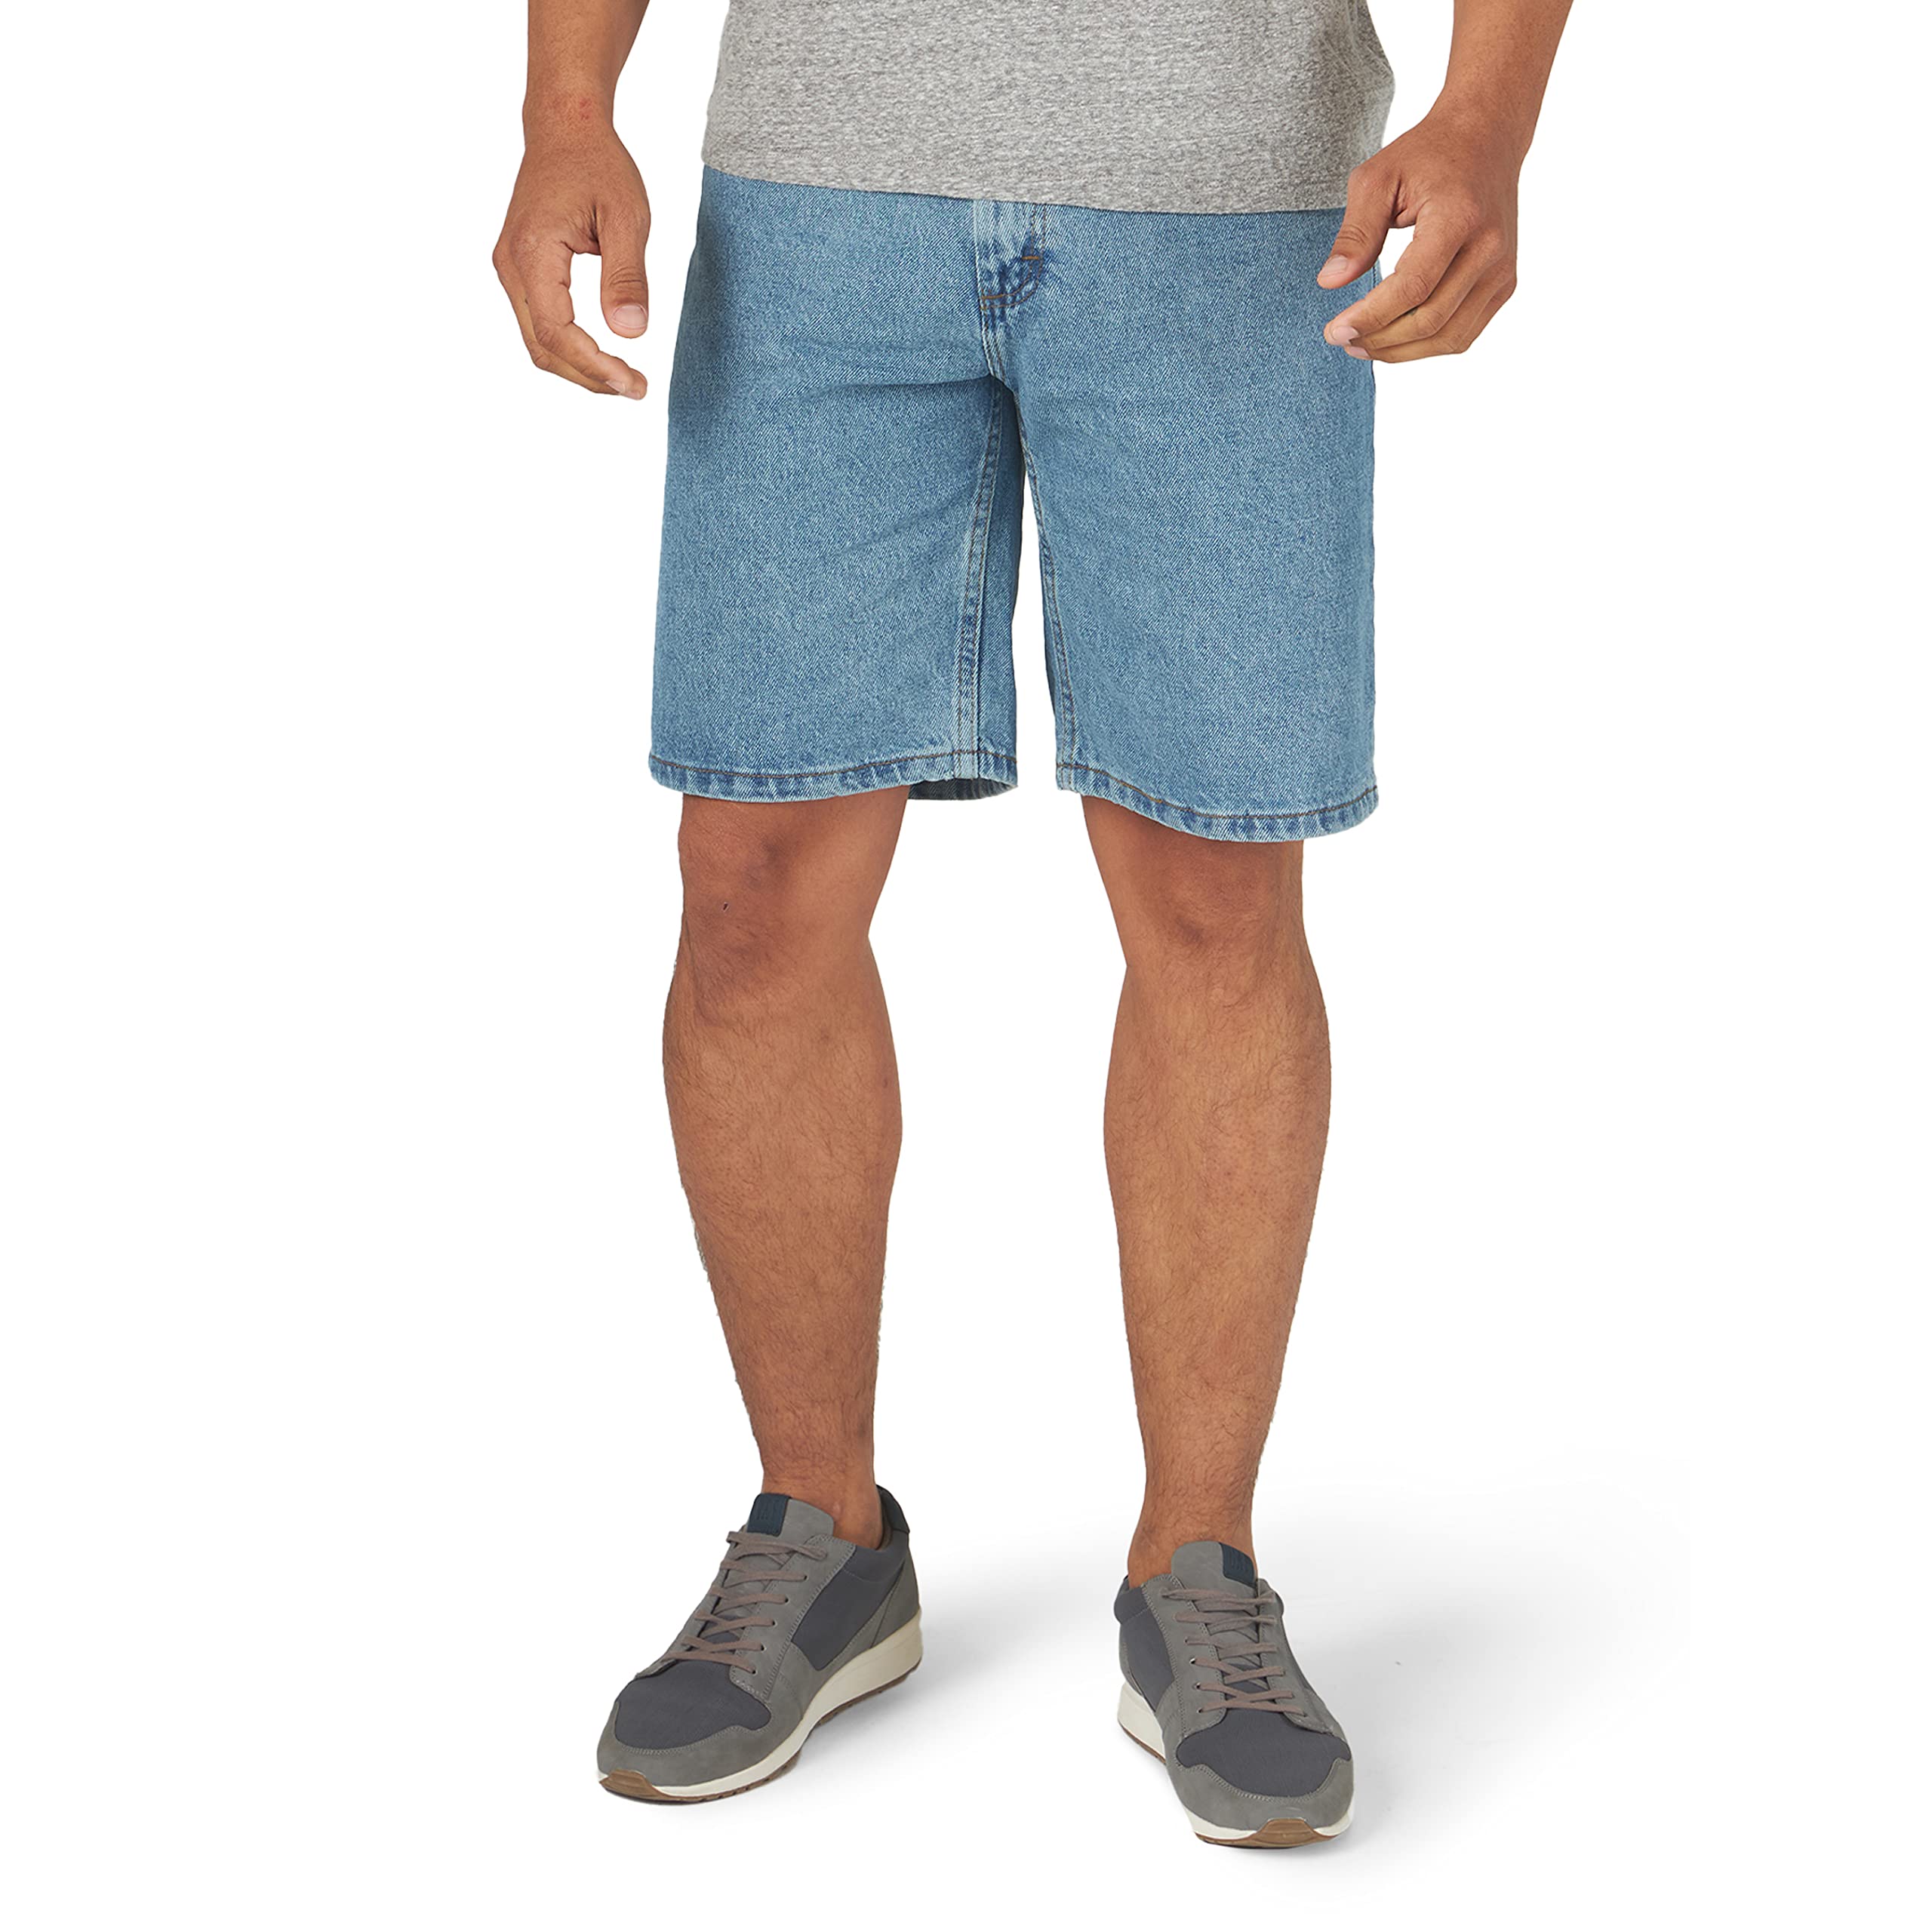 Lee Men's Regular Fit Denim Short (Light Stone) $12.59 + Free Shipping w/ Prime or on $35+